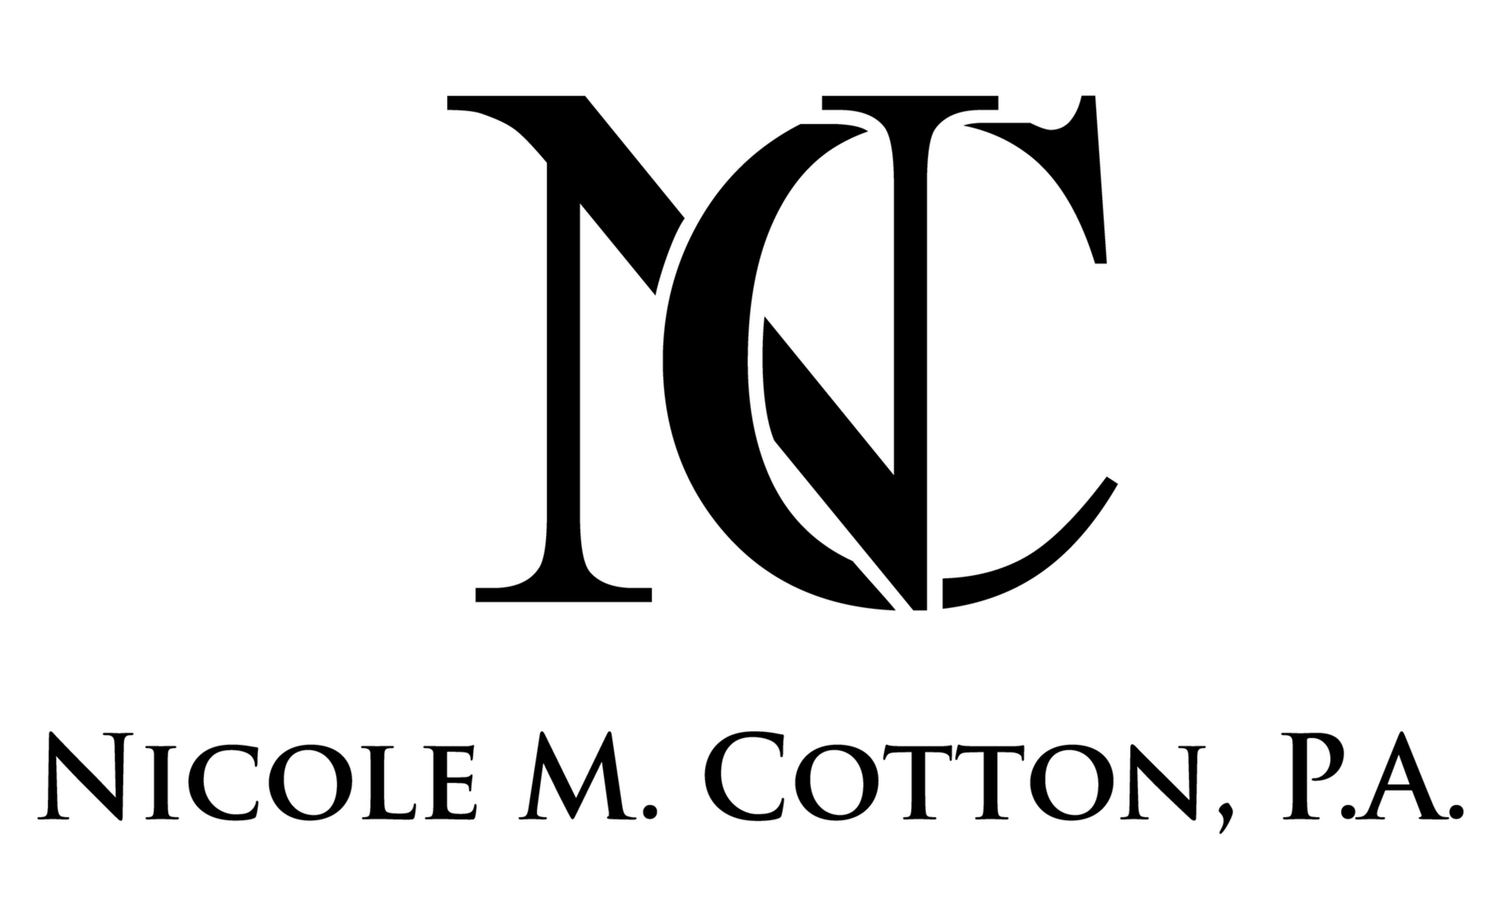 Nicole M. Cotton, P.A.